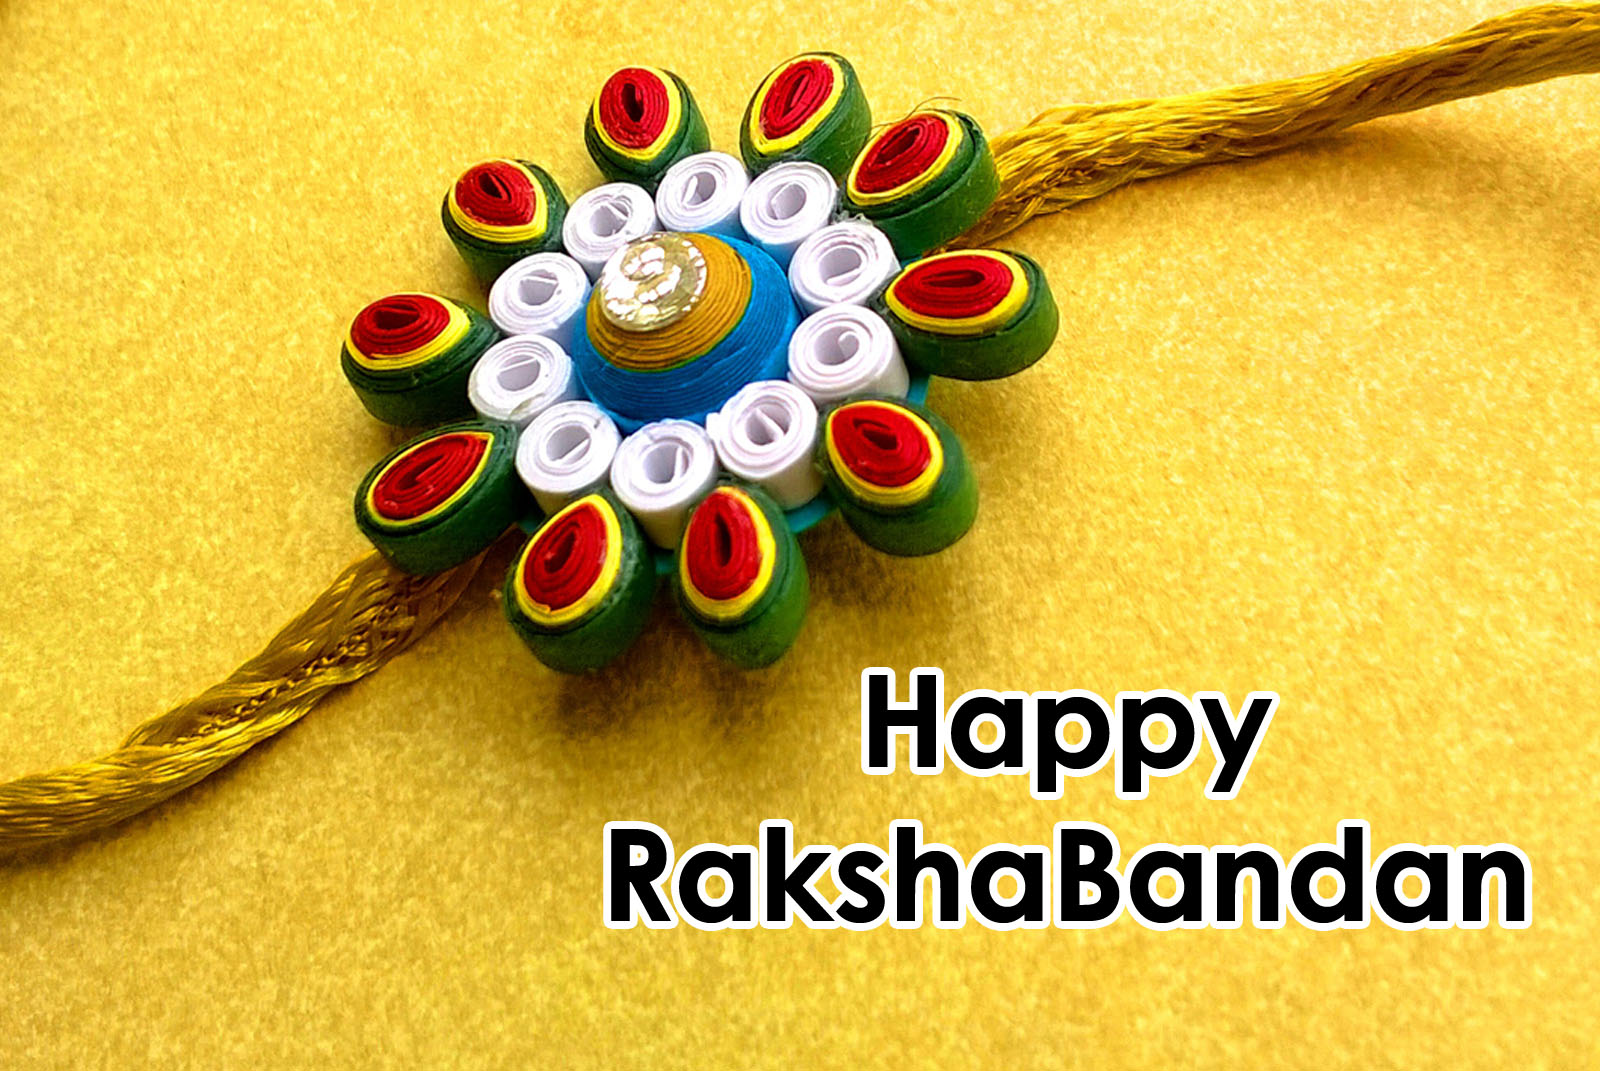 Buy/Send Special Navgrah Raksha Bandhan Blessings Gift Box With Rakhi  Online- FNP